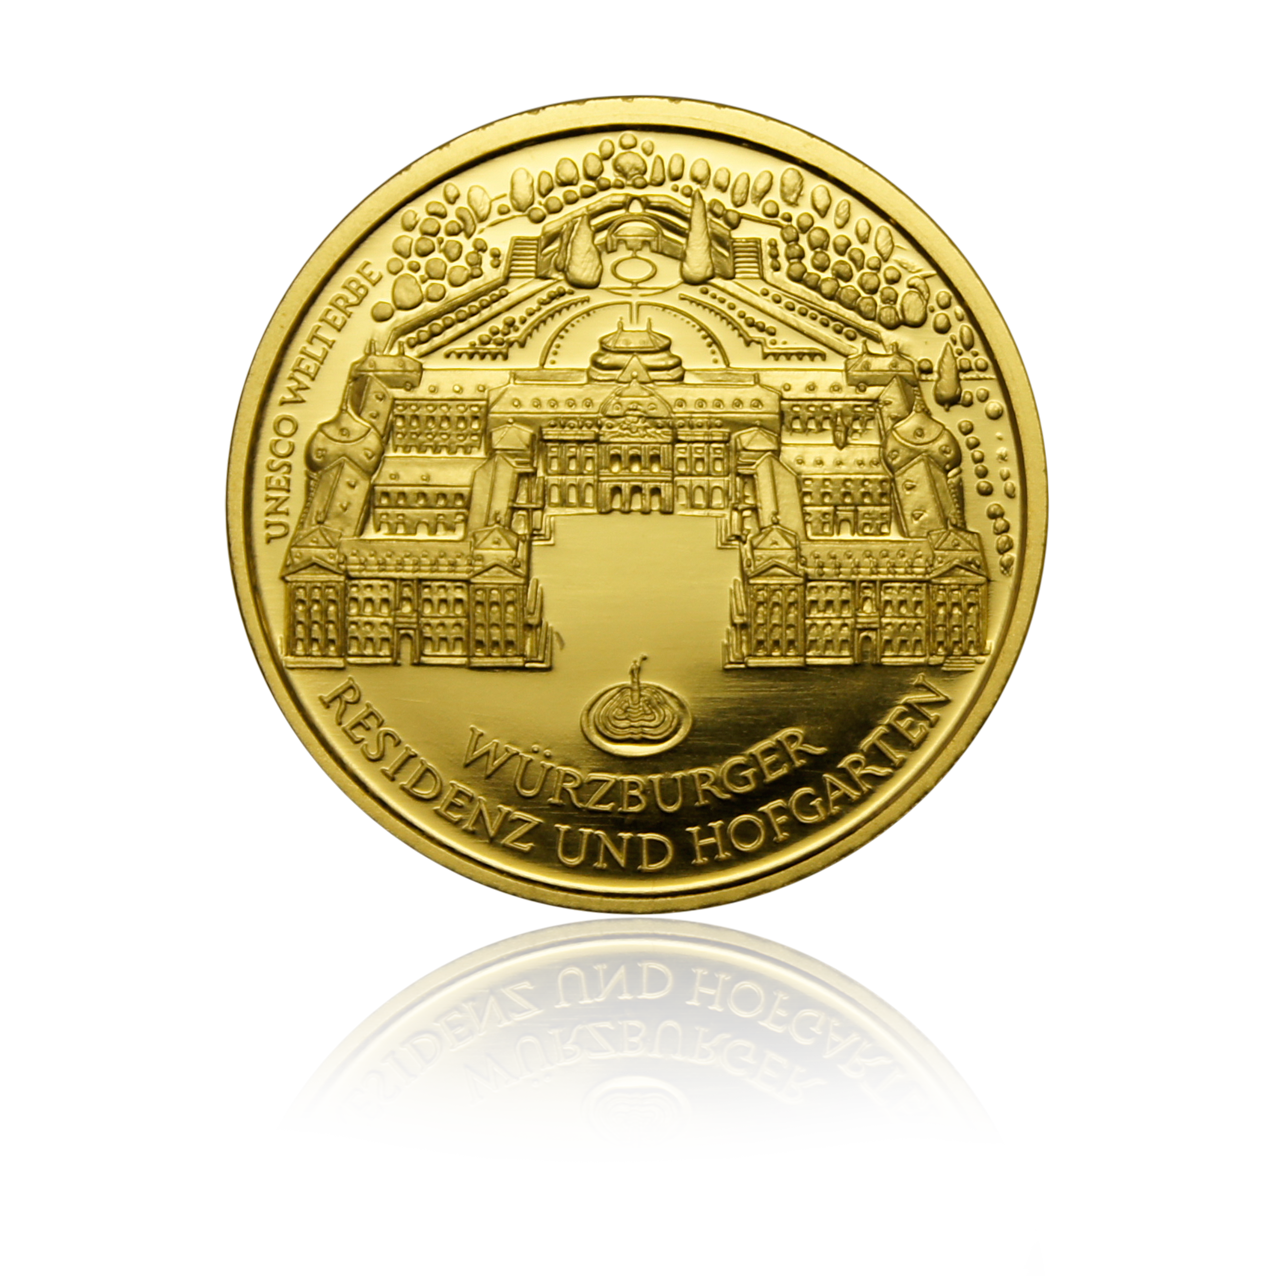 100 Euro gold coin "Würzburg" 2010 - Germany 1/2 oz gold coin